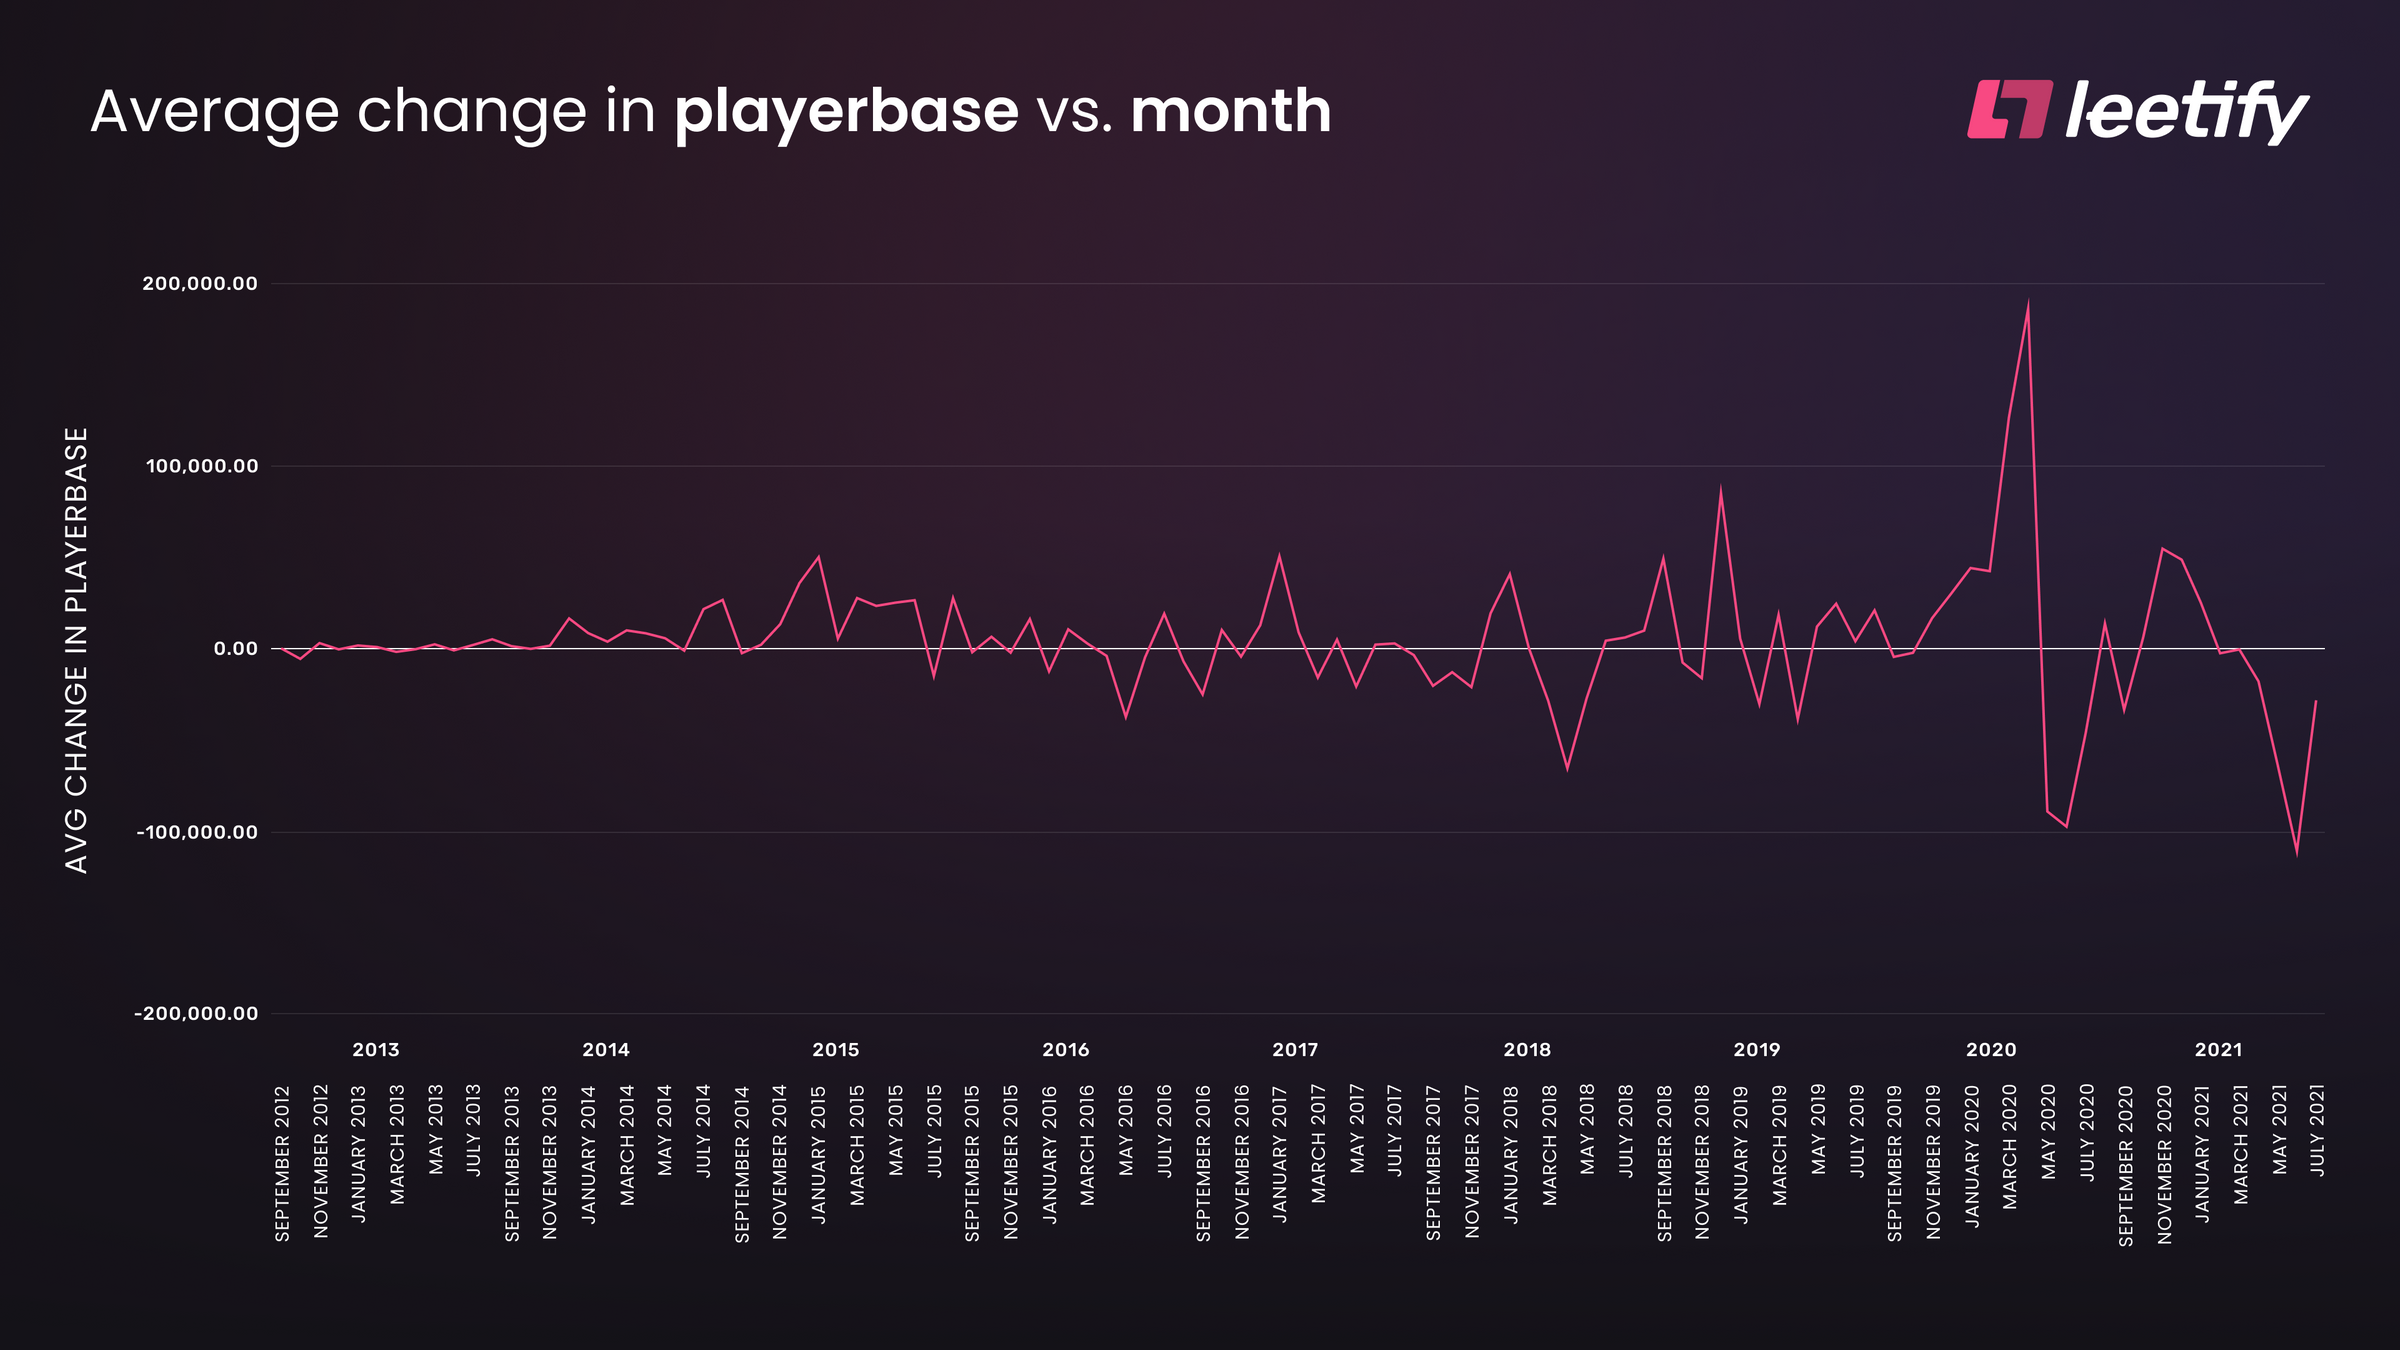 CSGO Average Change in Playerbase per Month